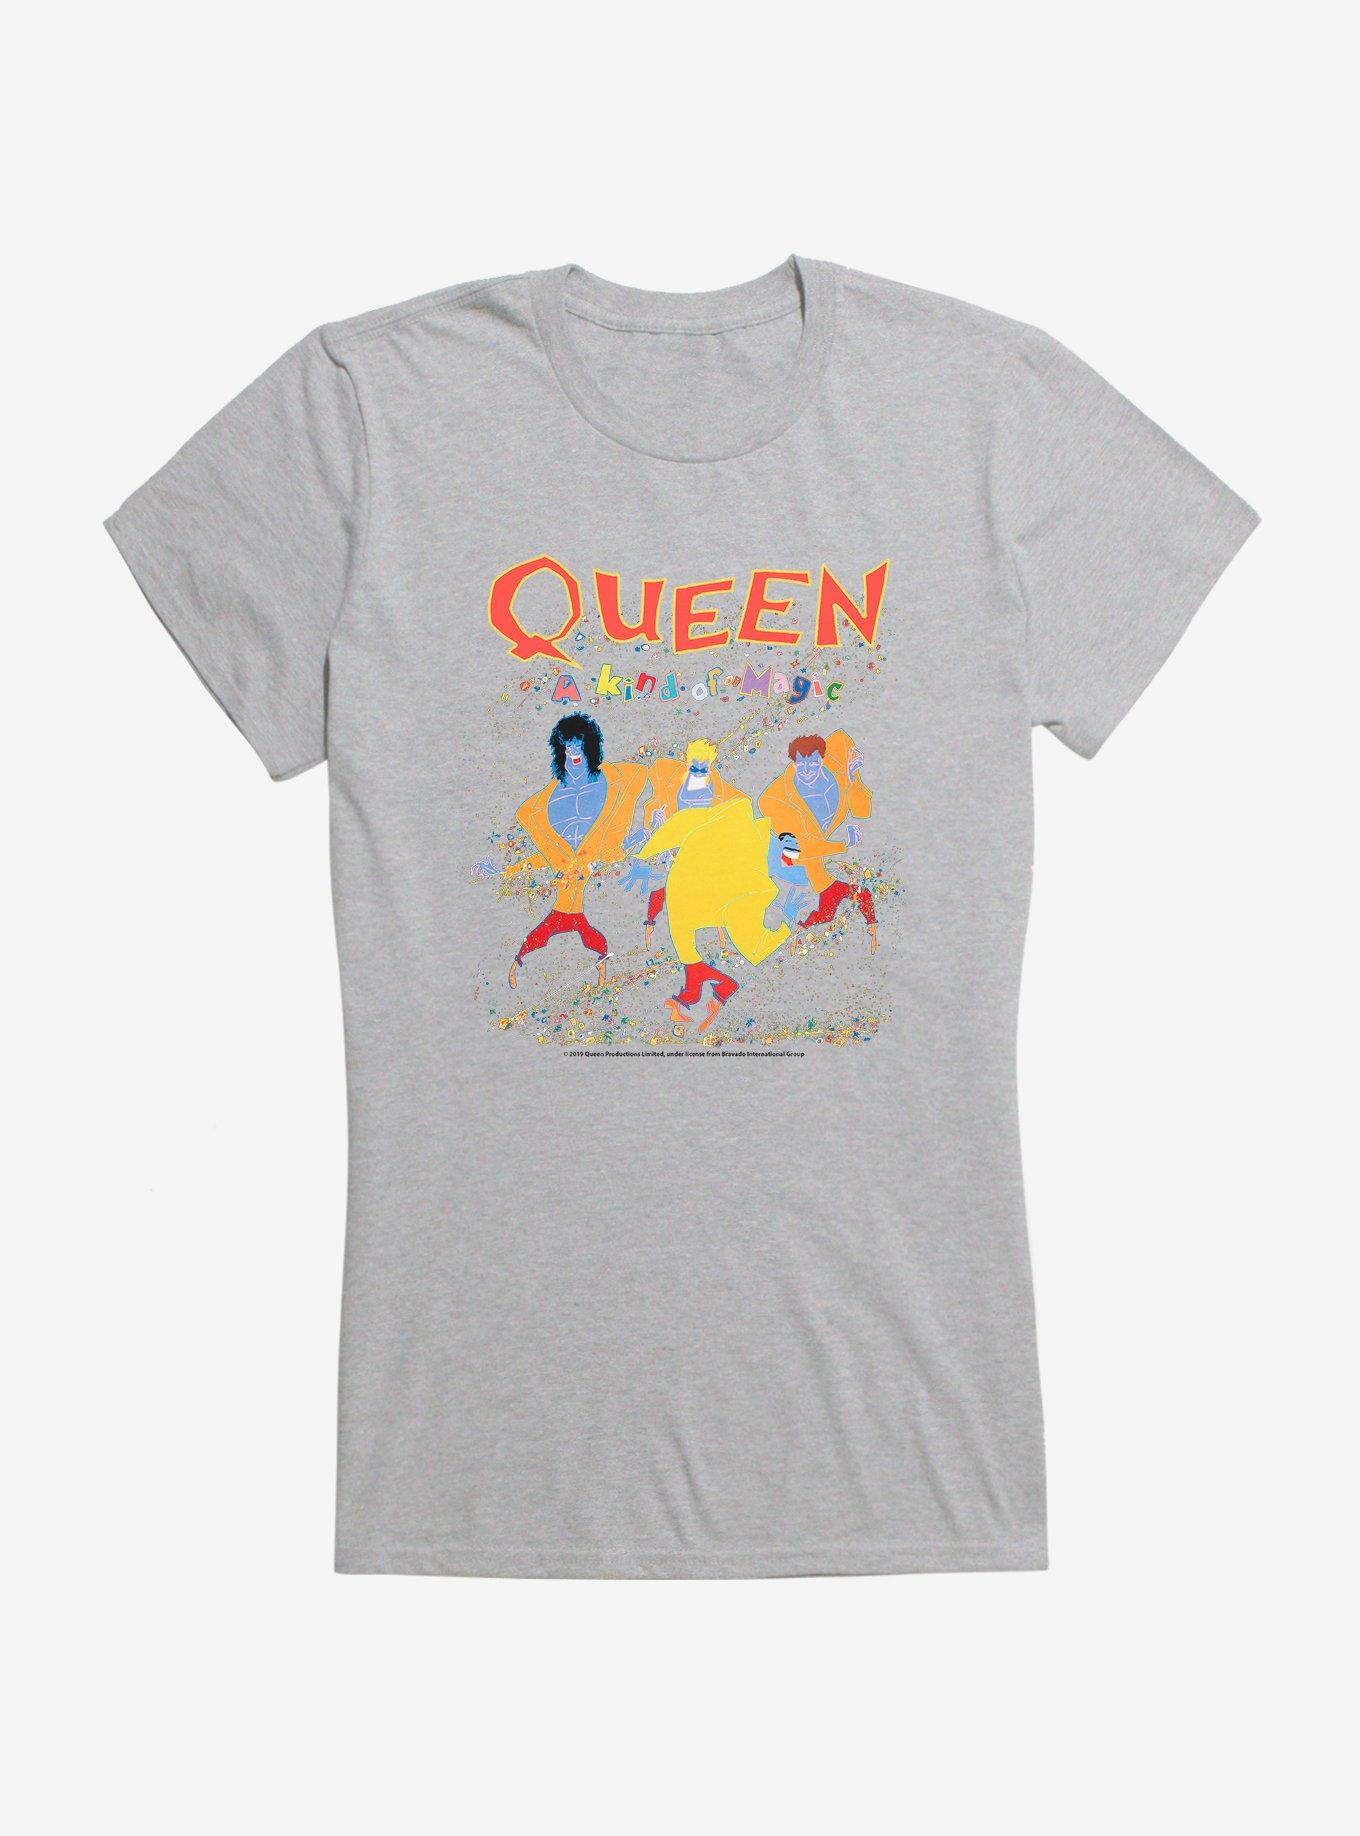 Queen A Kind of Magic Girls T-Shirt | Hot Topic